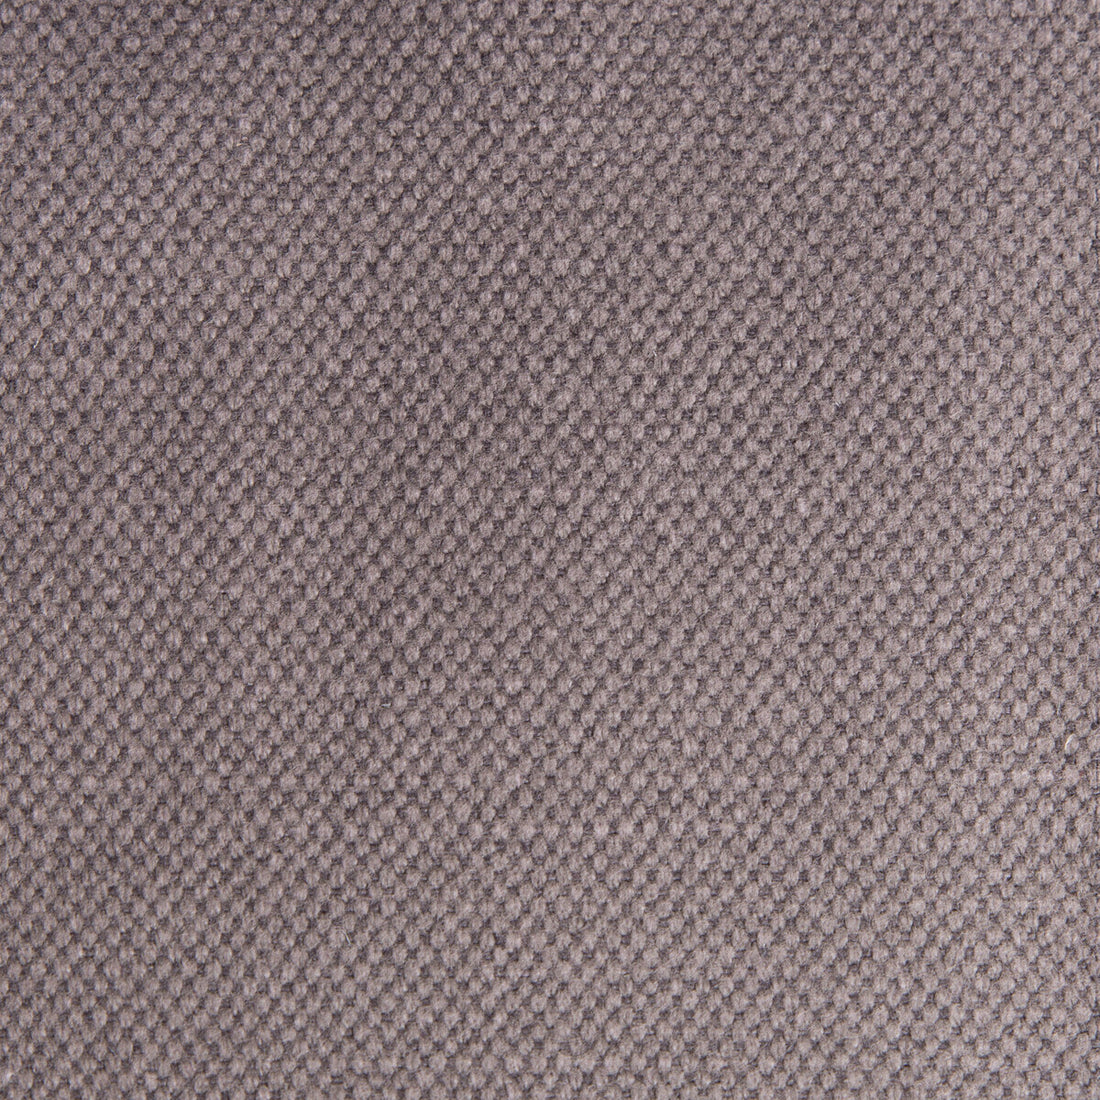 Lima fabric in plomo color - pattern GDT5616.037.0 - by Gaston y Daniela in the Gaston Nuevo Mundo collection